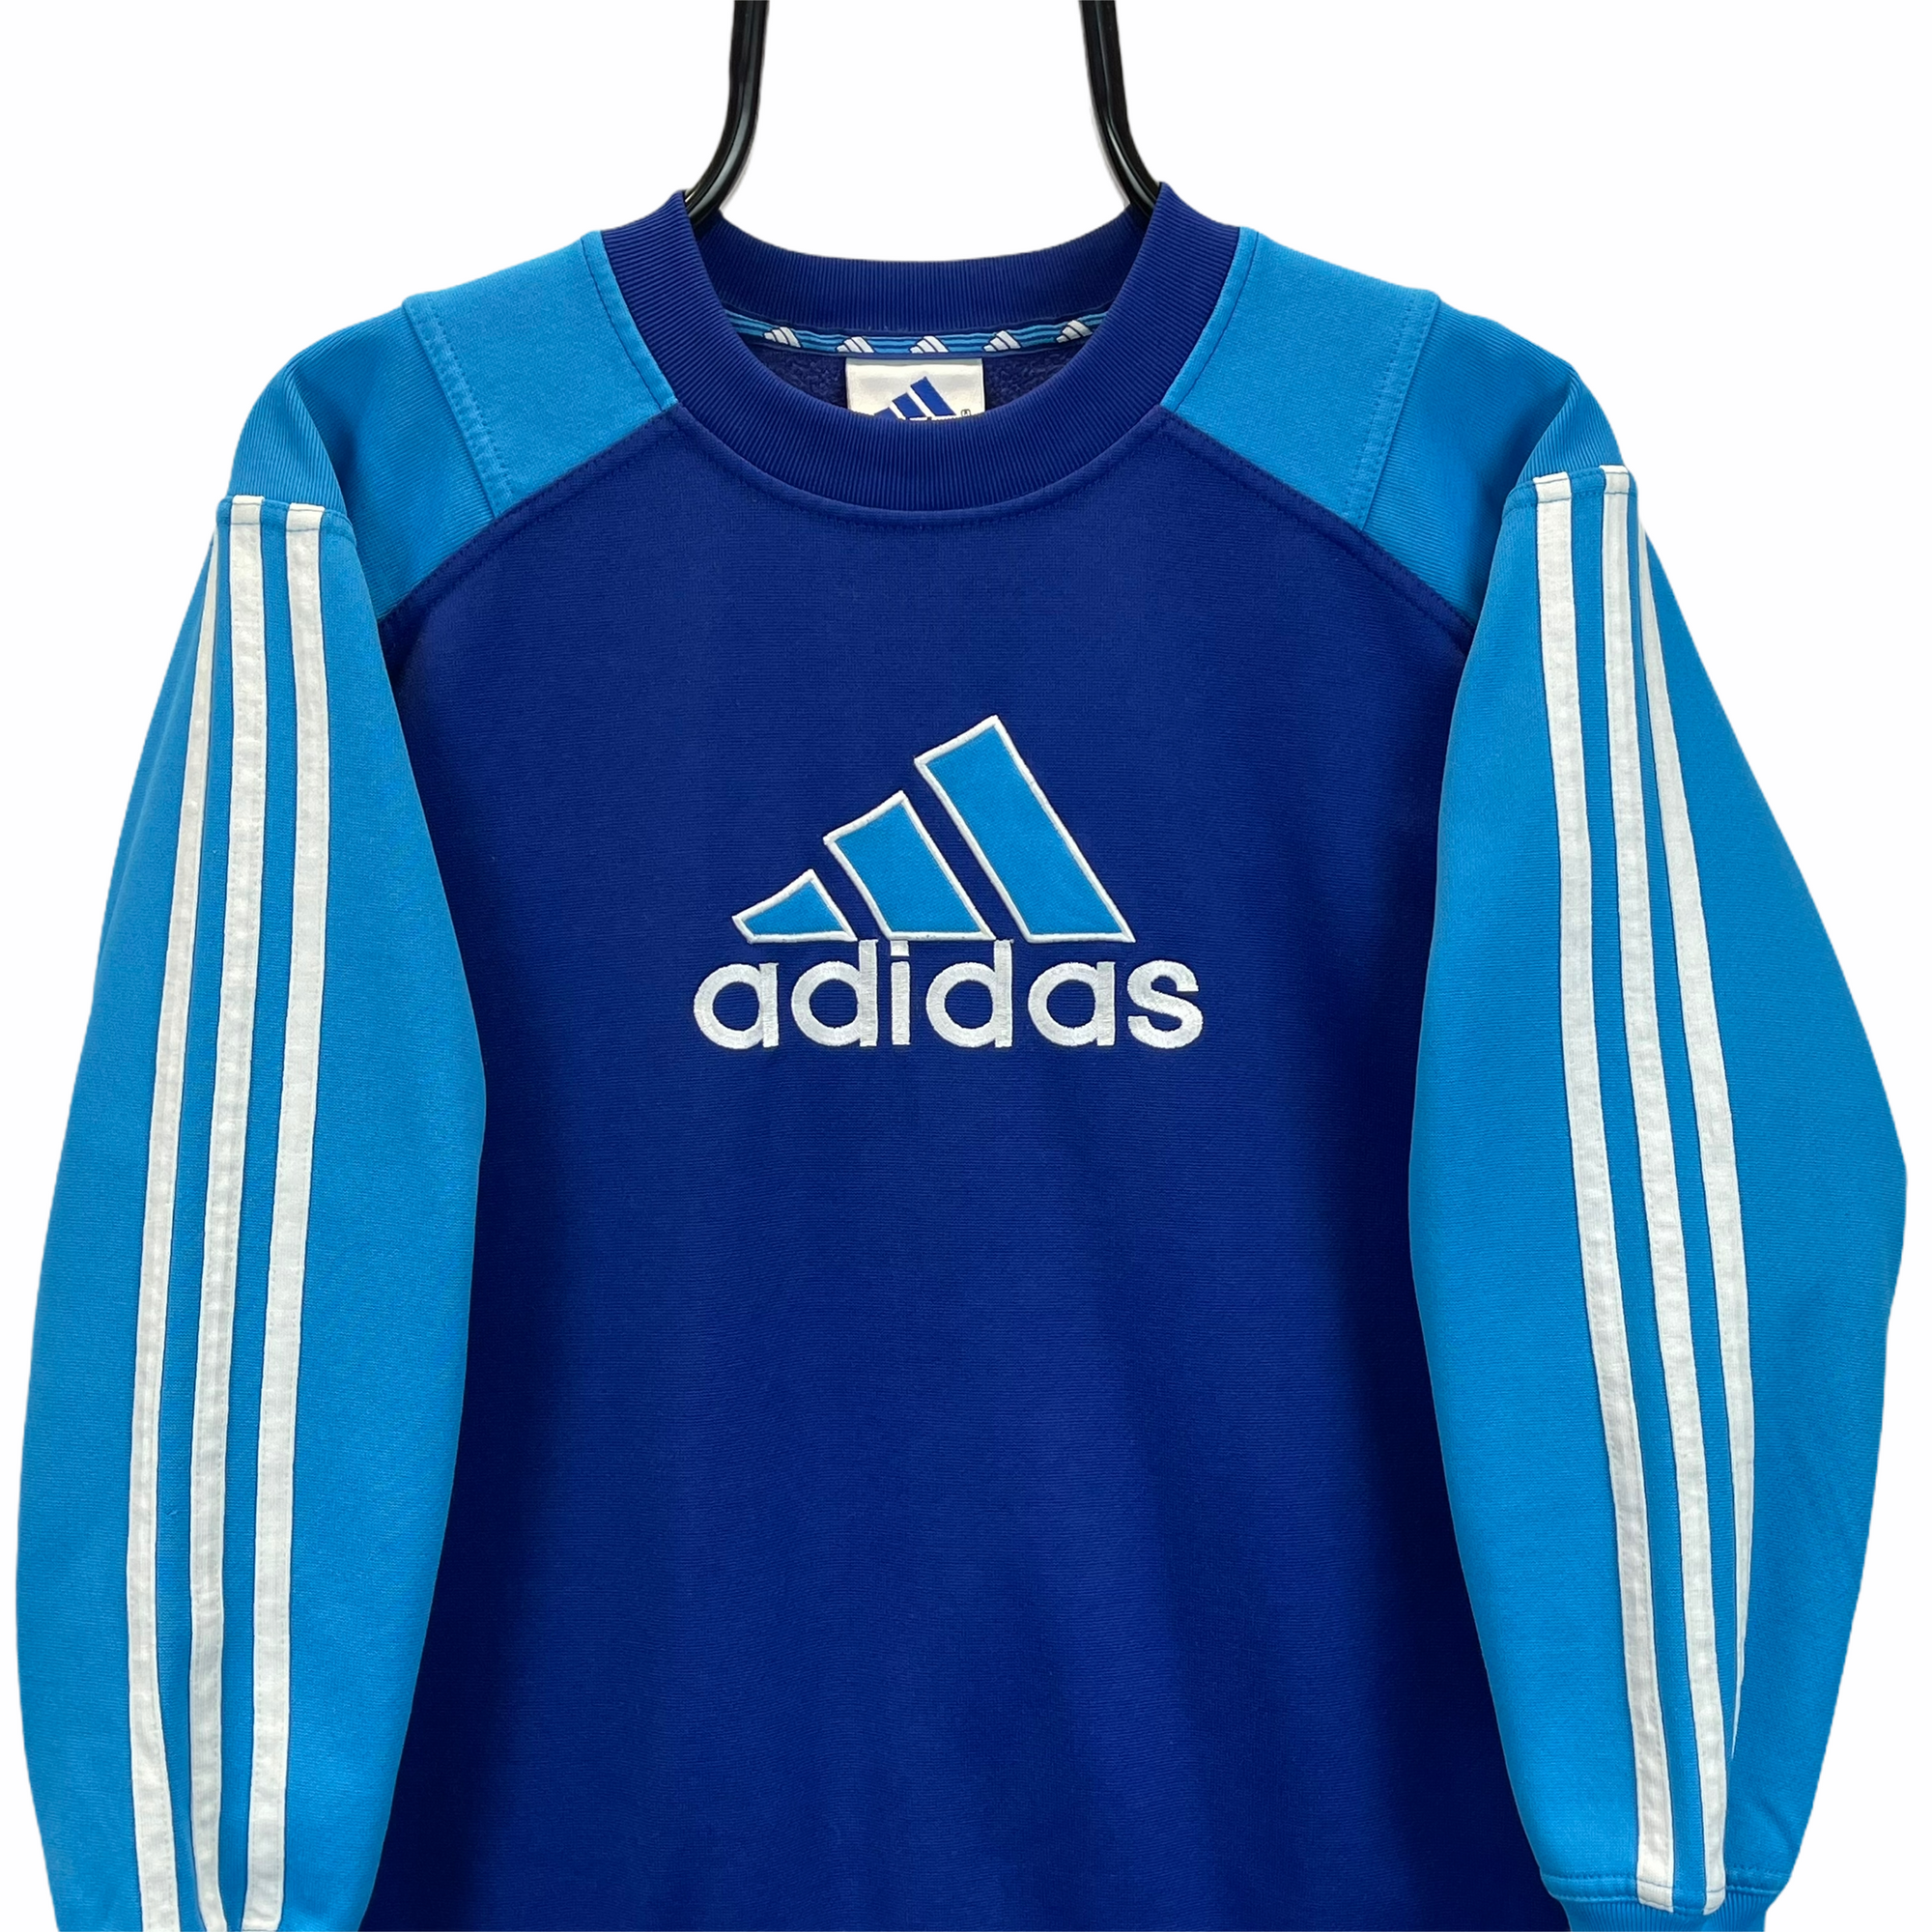 Vintage 90s Adidas Spellout Sweatshirt in Blue - Men's Small/Women's Medium